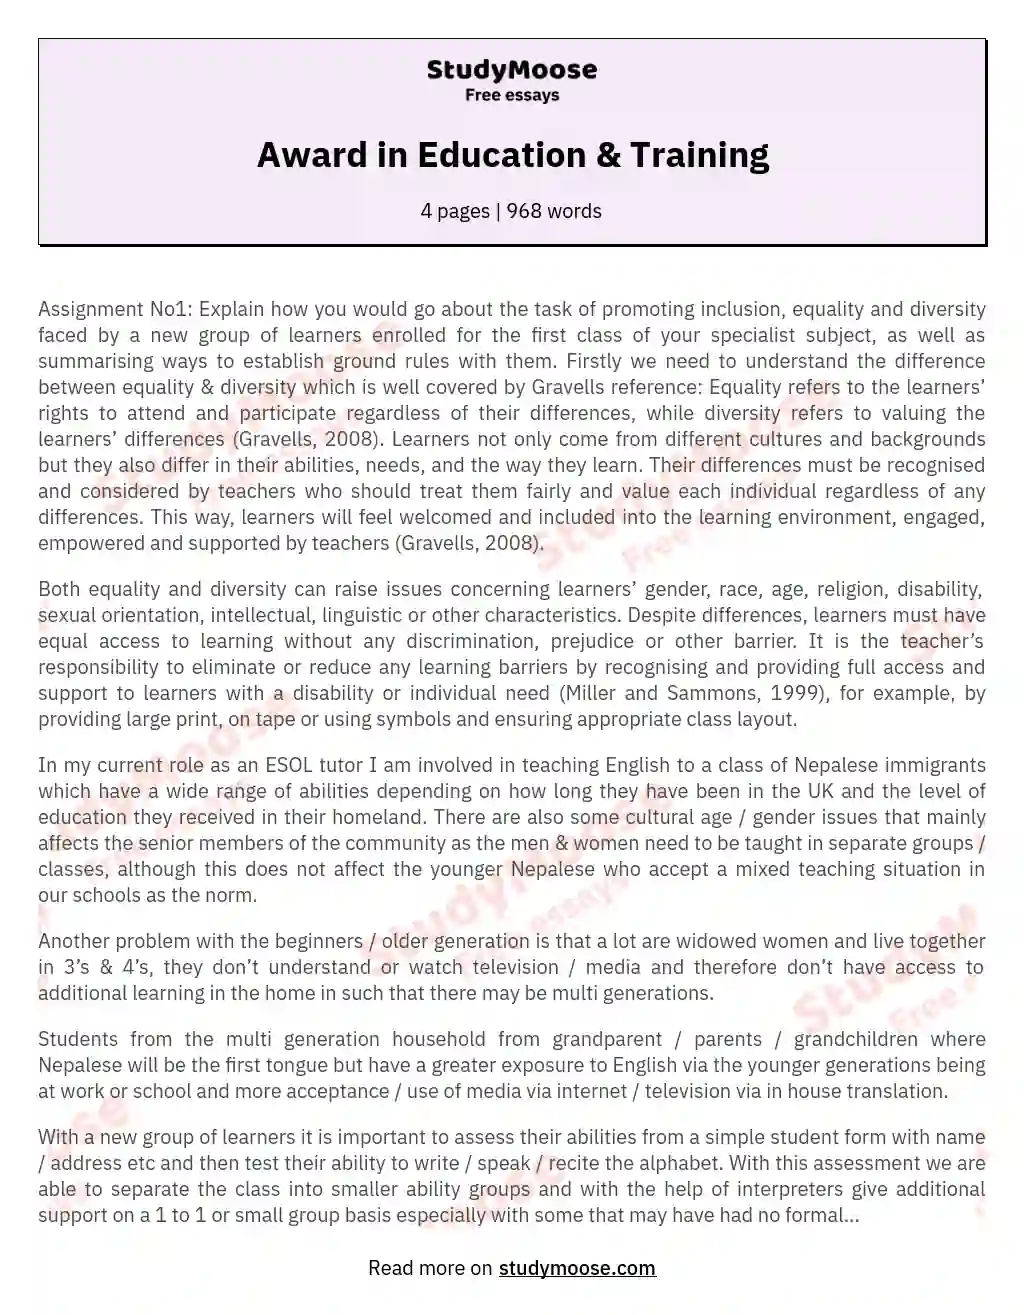 Award in Education & Training essay